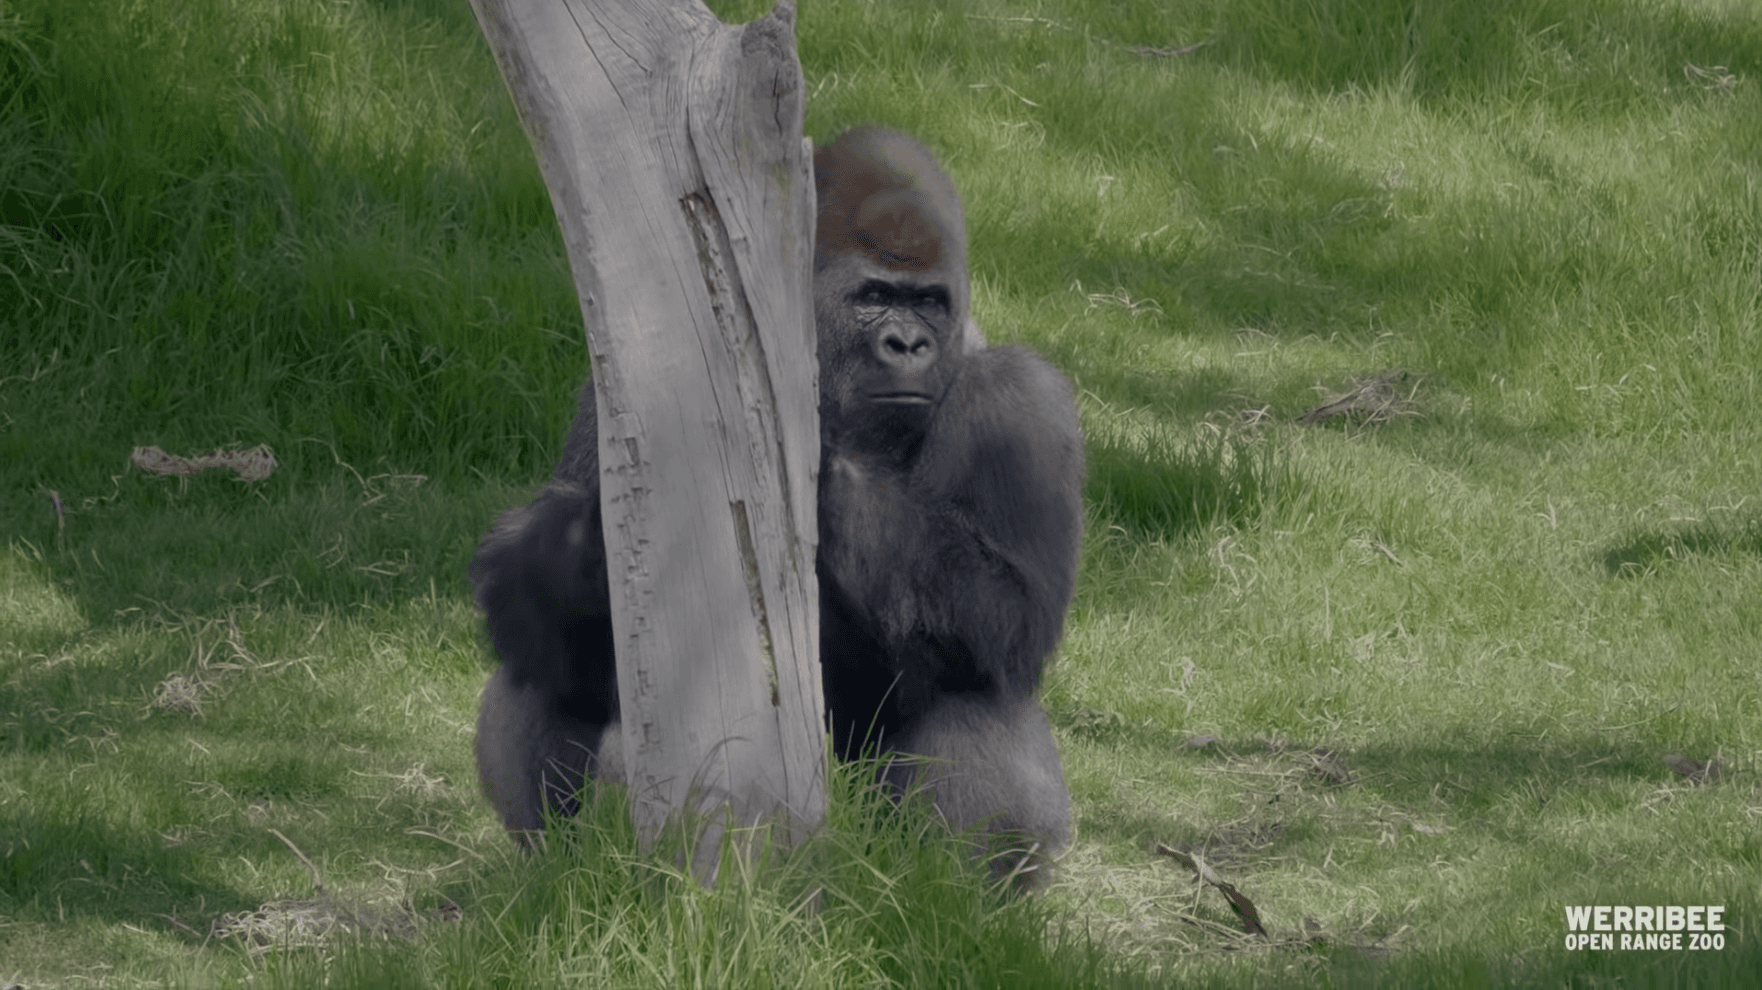 A gorilla appears sitting on green grass near a tree